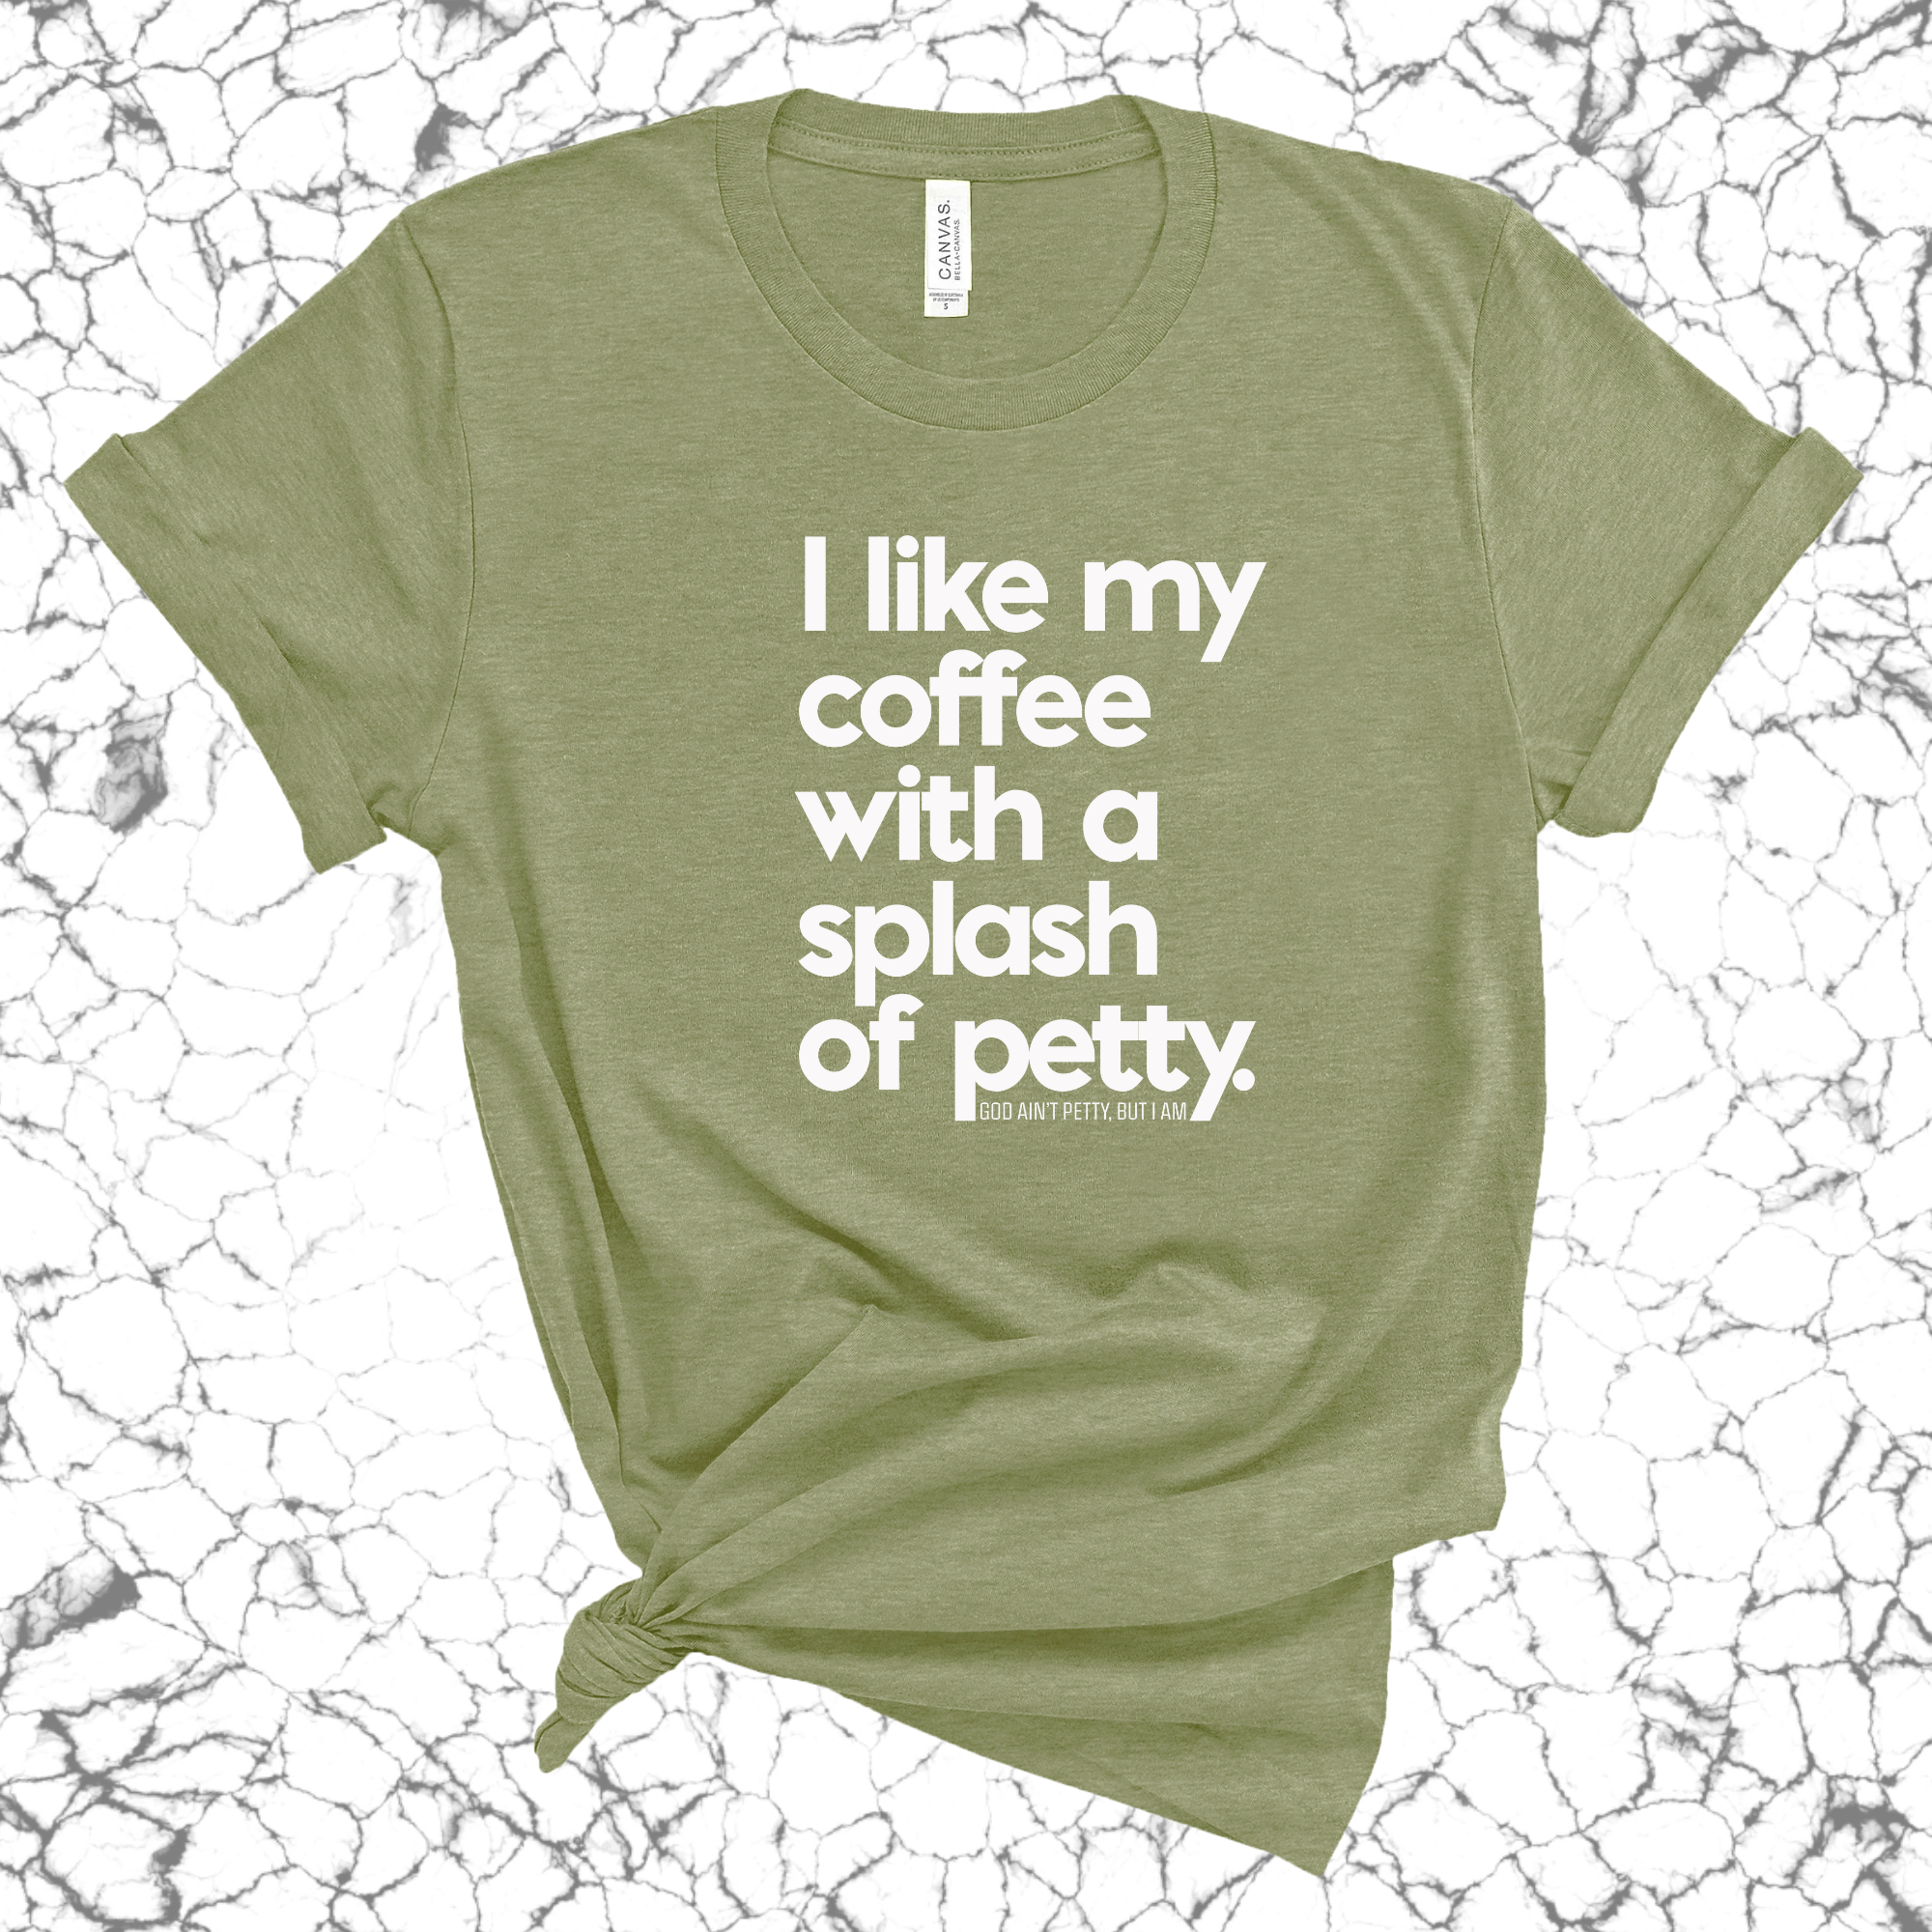 I like my coffee with a Splash of Petty Unisex Tee-T-Shirt-The Original God Ain't Petty But I Am